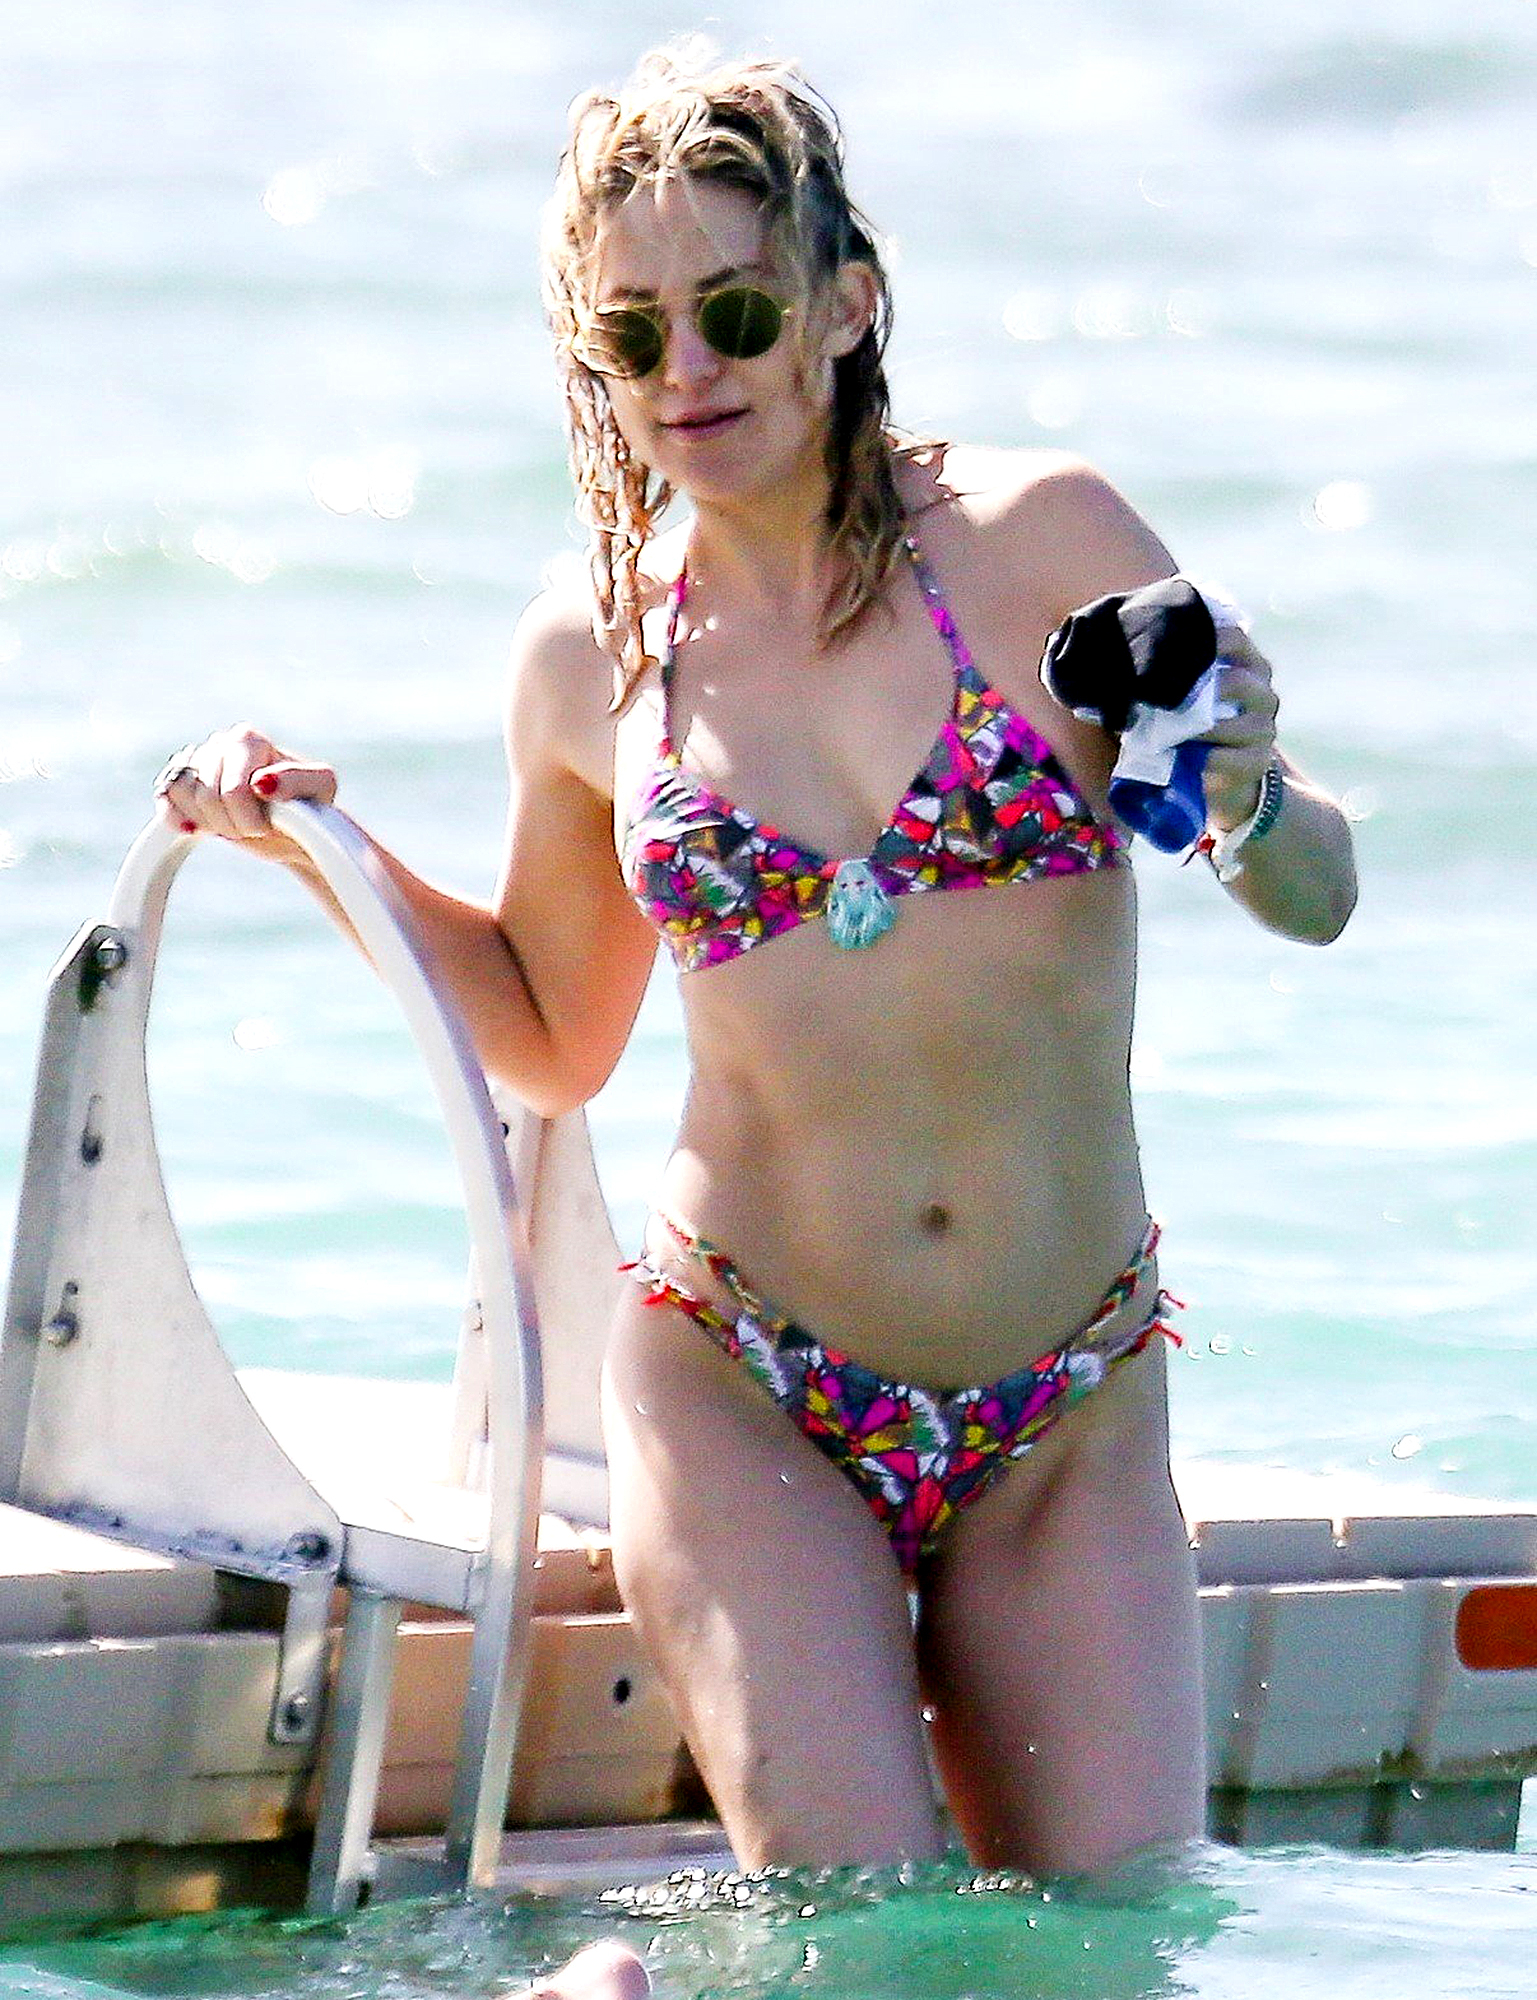 Kate Hudson Shows Off Her Bikini Bod in Throwback Photo: Photo 3609334, Bikini, Kate Hudson Photos